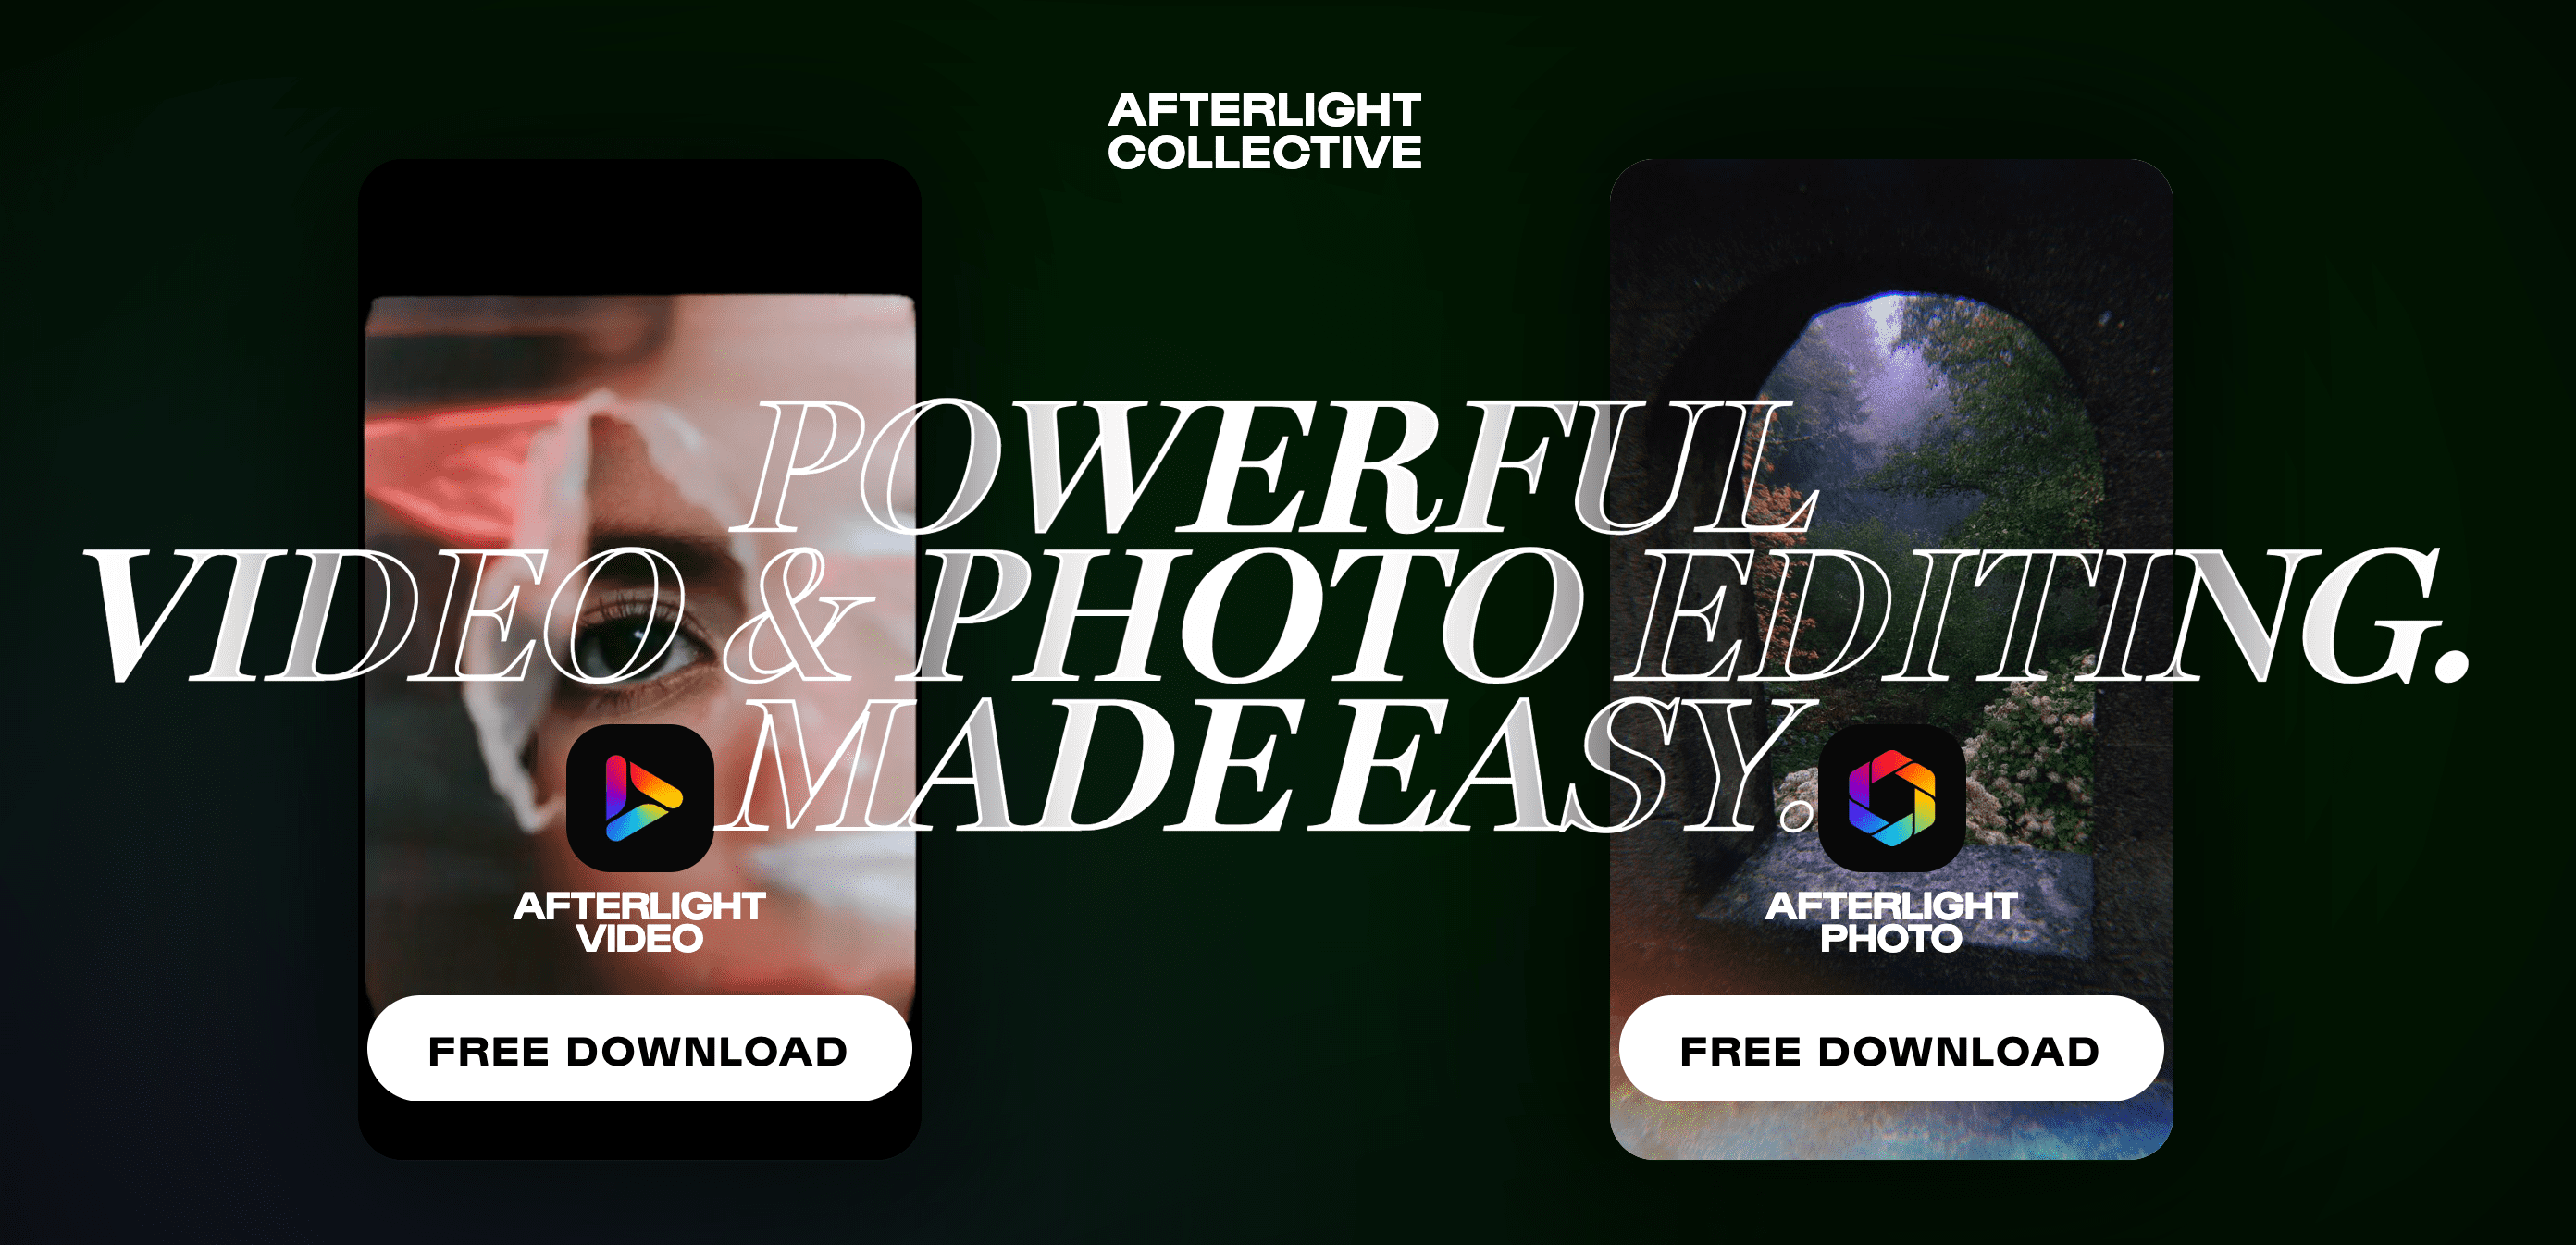 Afterlight photo editing app